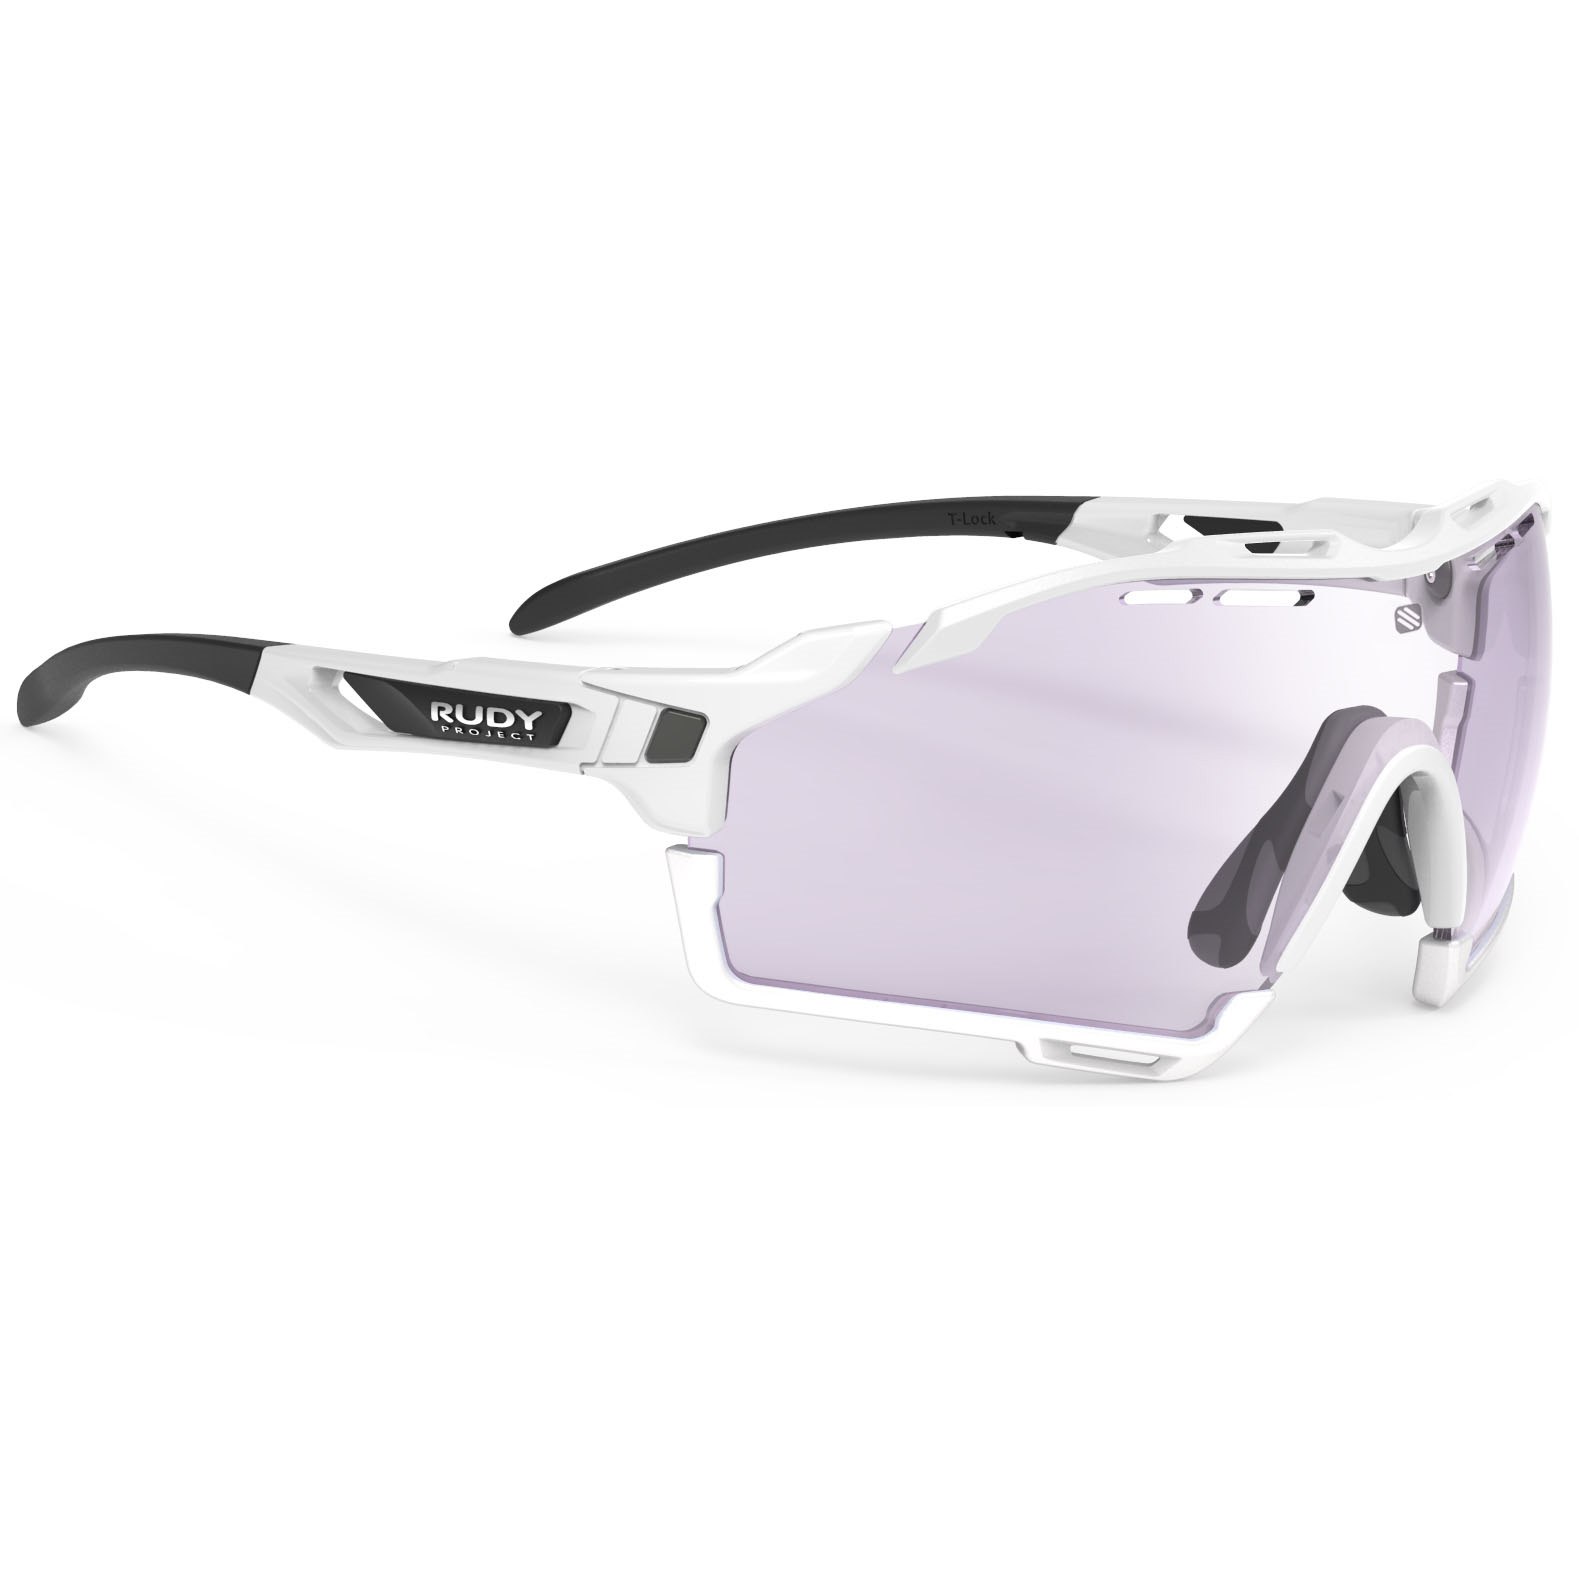 Productfoto van Rudy Project Cutline Glasses - Photochromic Lens - White Gloss / ImpactX 2 Laser Purple